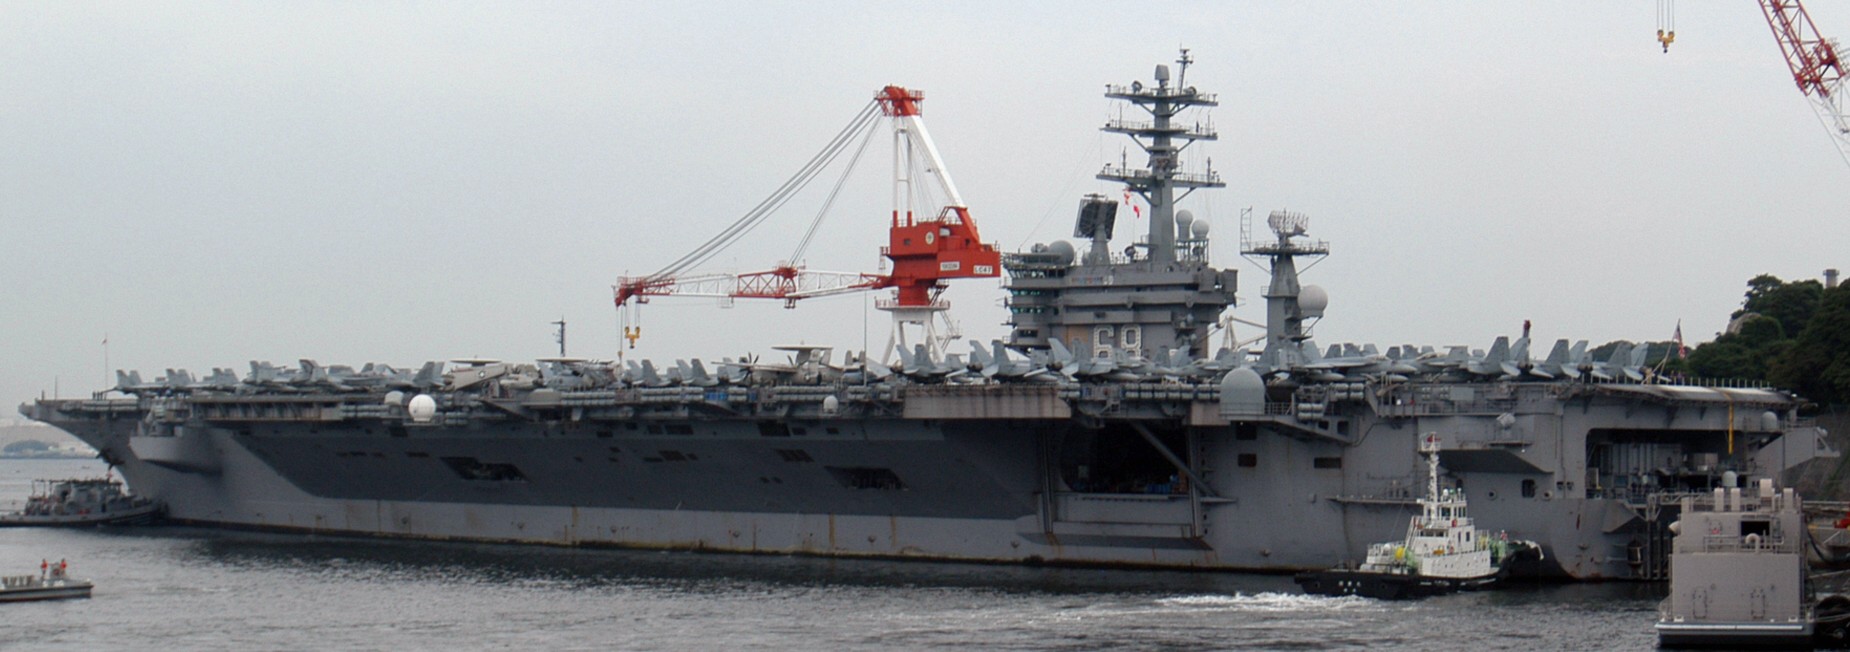 cvn-68 uss nimitz aircraft carrier air wing cvw-11 us navy yokosuka japan 173